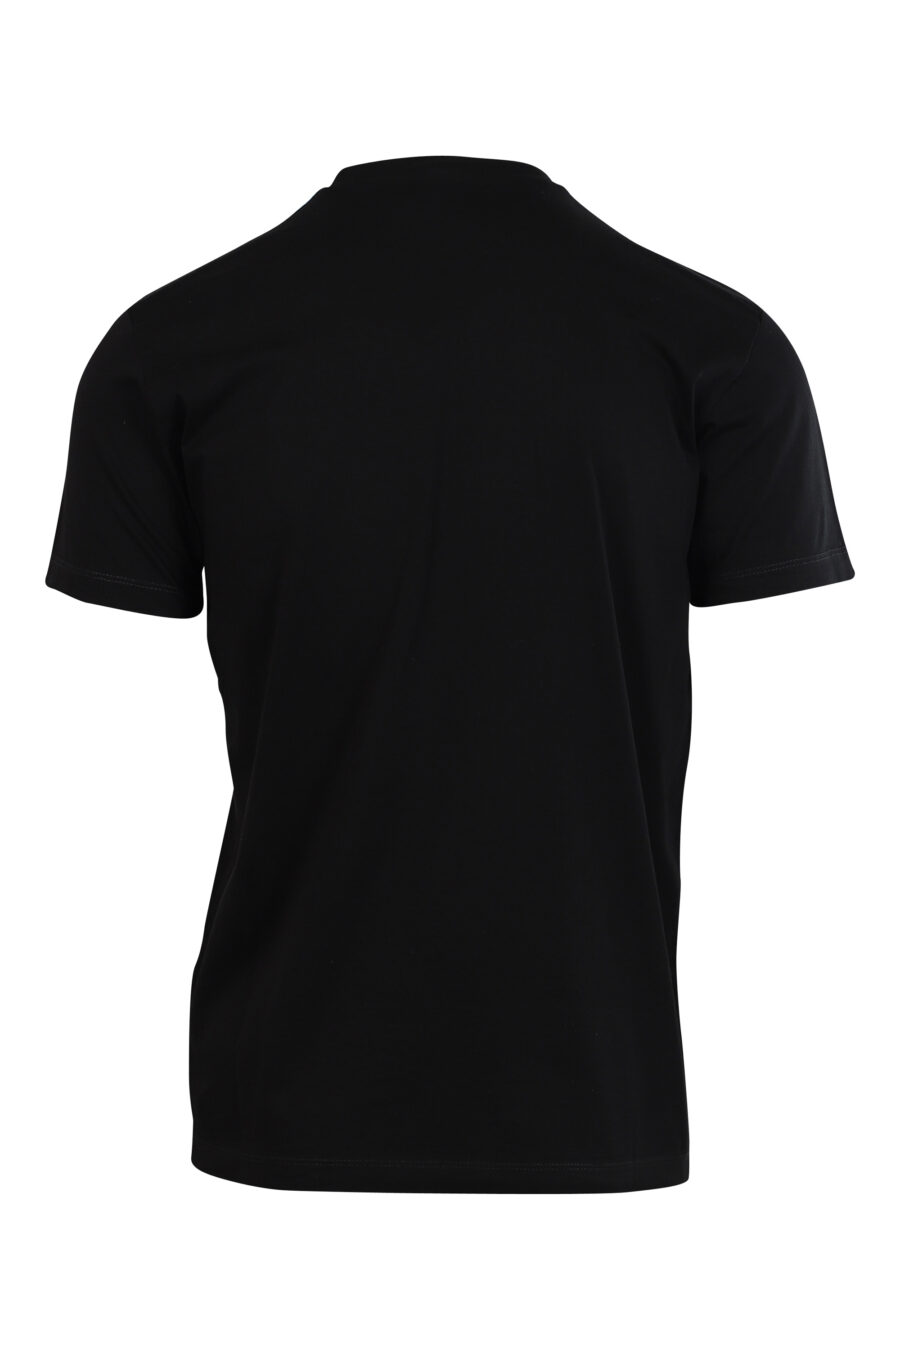 T-shirt noir avec maxilogo "université" blanc - 8052134945810 2